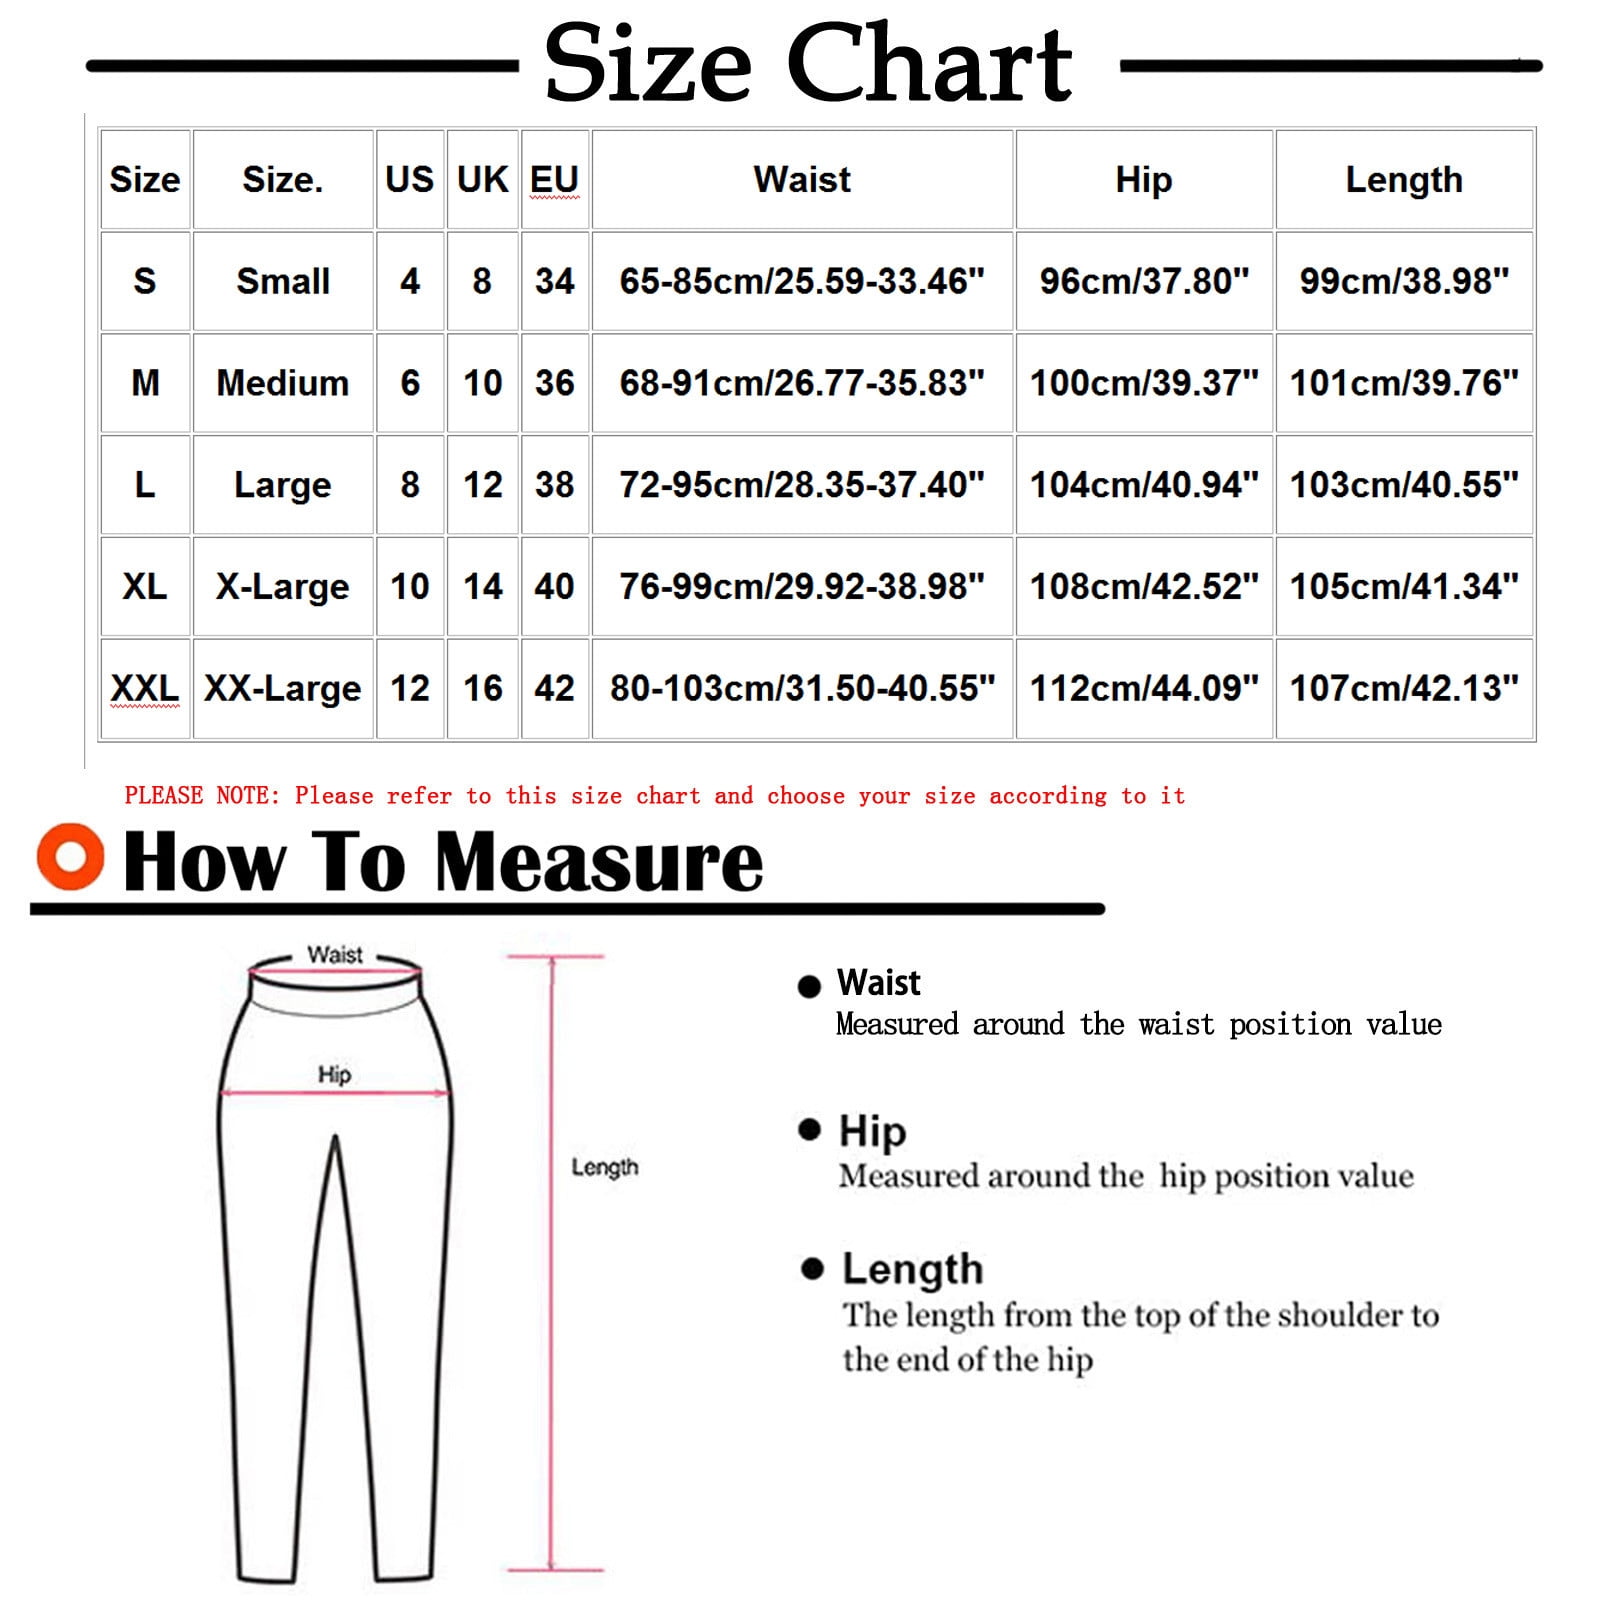 JWZUY Womens Plain Pants Casual Jogger Sweatpants Ankle Length Drawstrijg  Elastic Waist Pant Workout Fitness Pants Black XL 